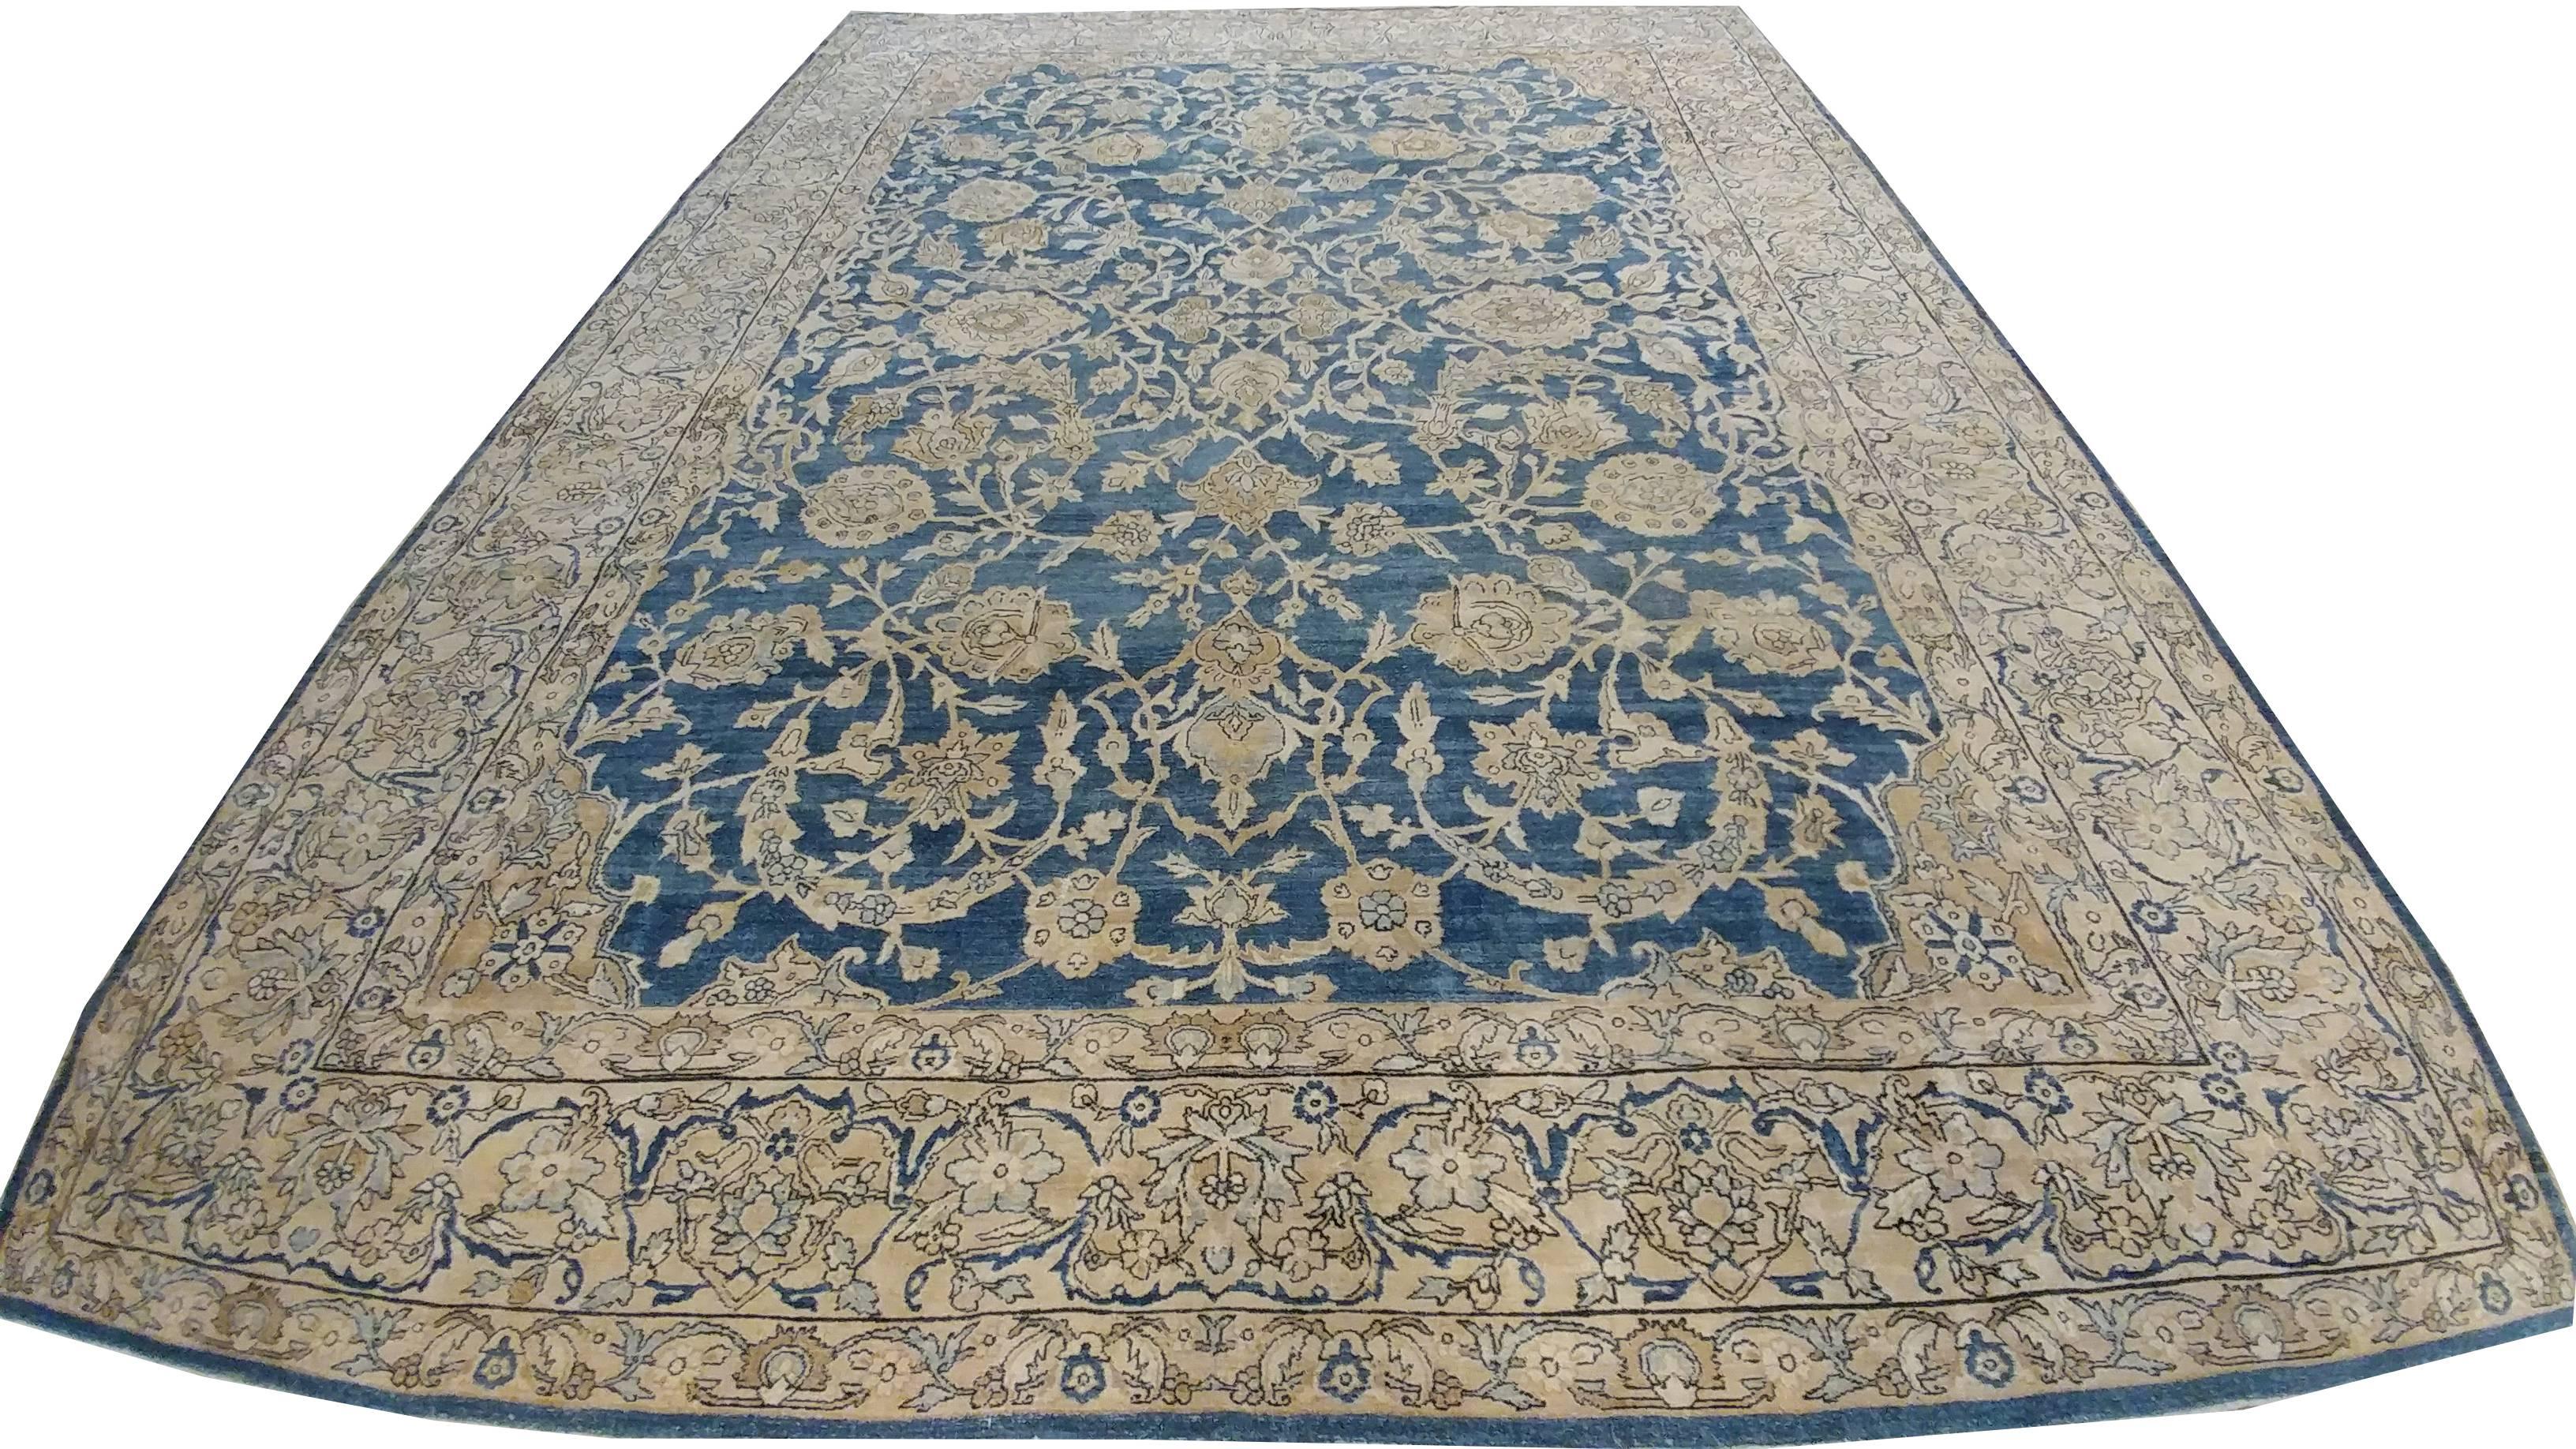 20th Century Antique Persian Kerman Carpet, Oriental Rug, Handmade, Blue, Ivory, Taupe, Tan For Sale